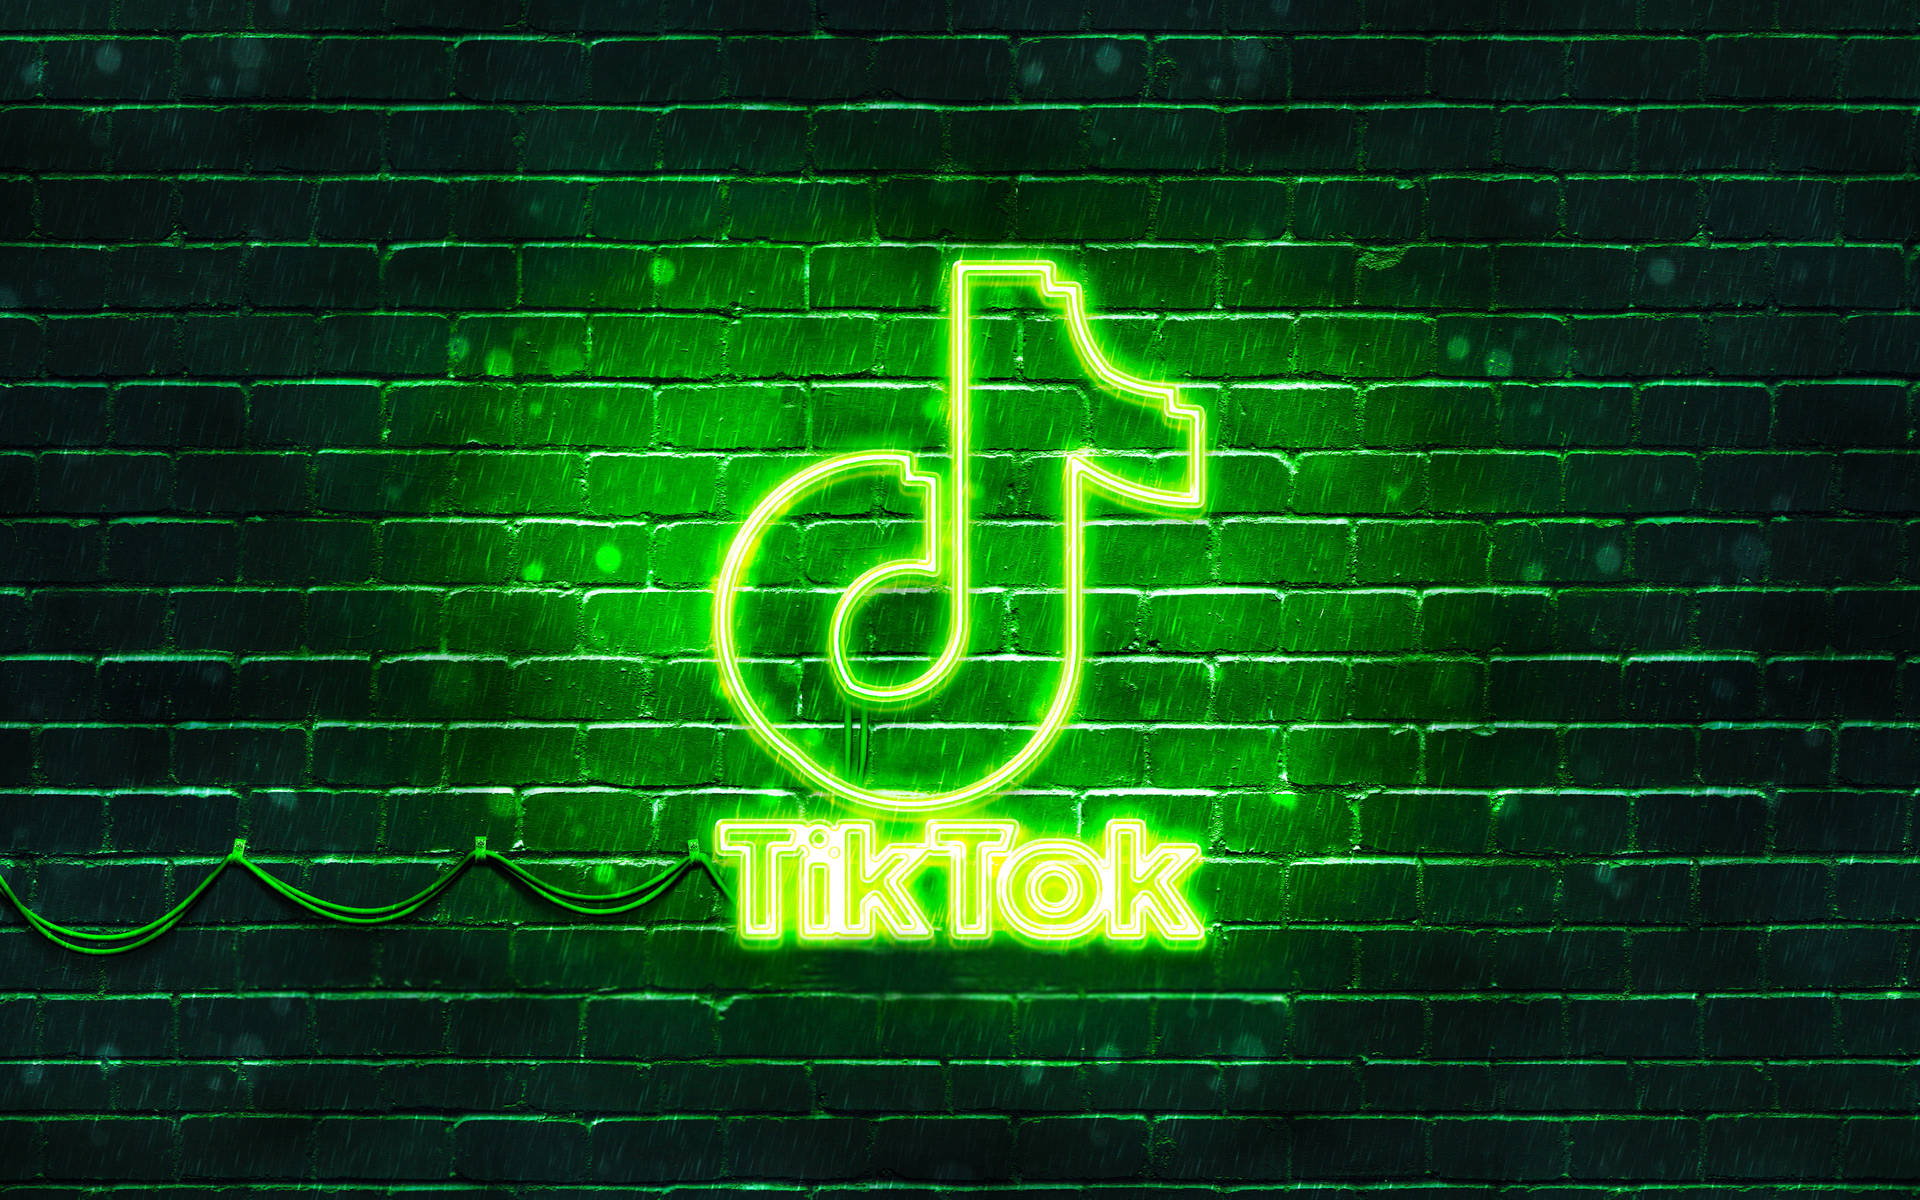 Tiktok 3840X2400 Wallpaper and Background Image